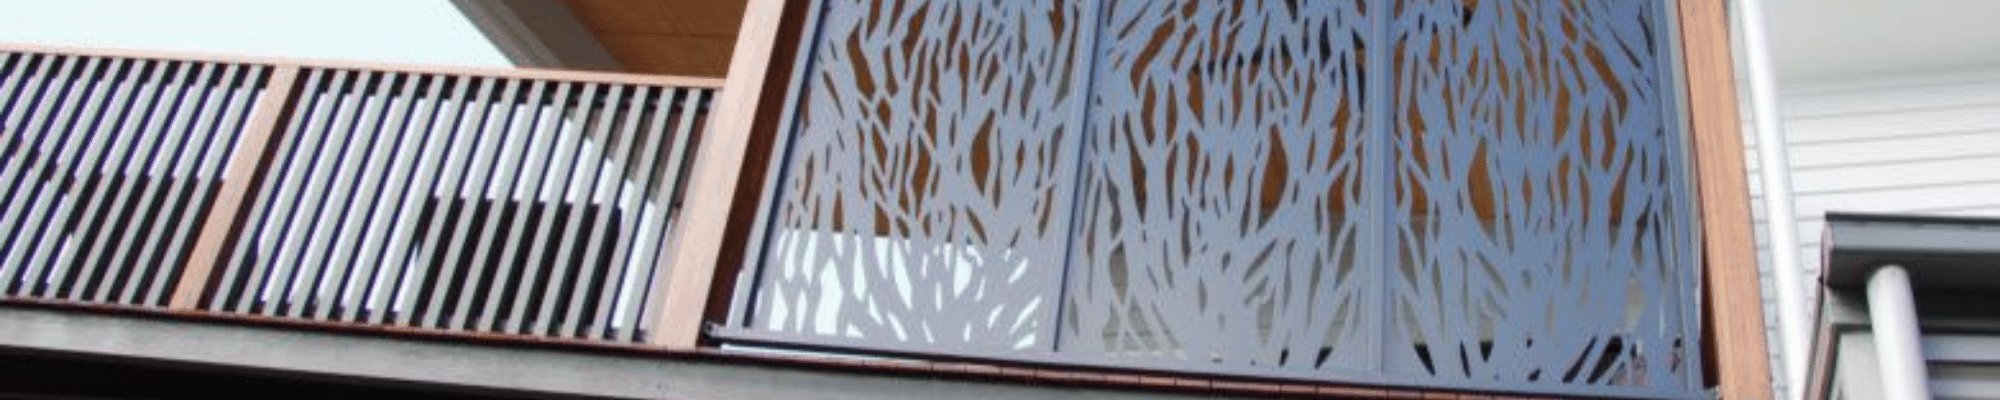 balcony privacy panels